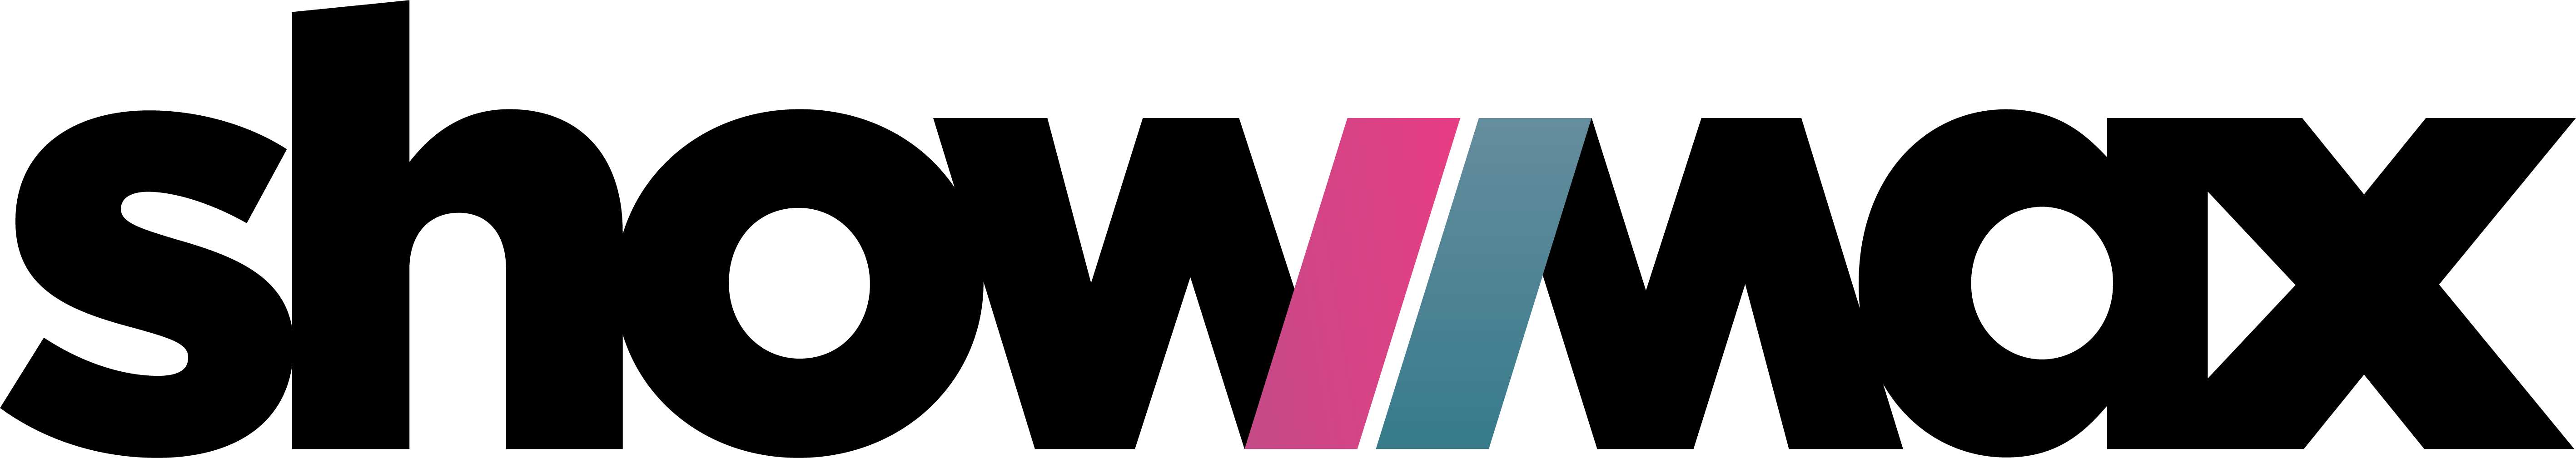 Showmax logo